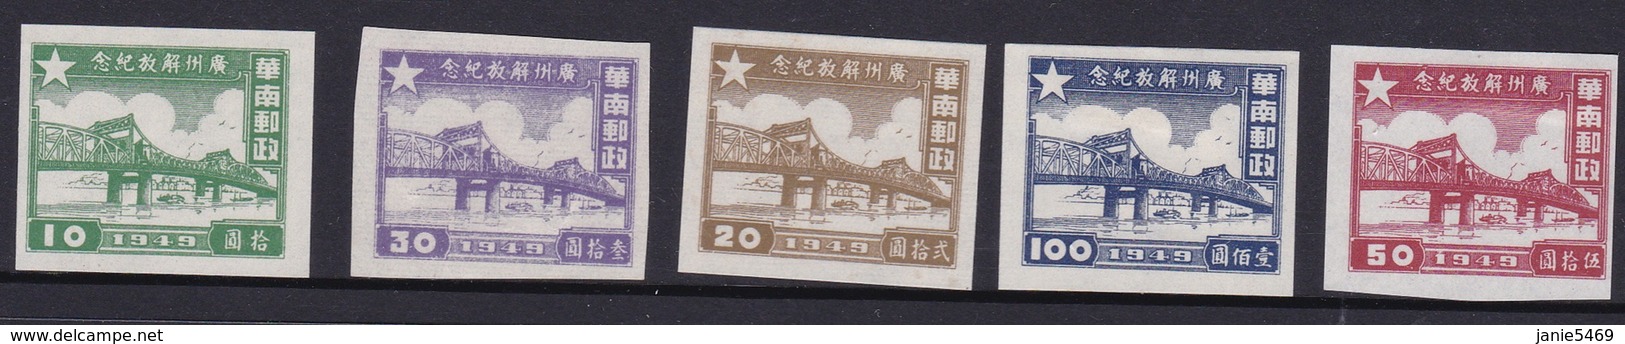 China South China SG SC1-5 1949 Pearl River Bridge, Mint Never Hinged - Zuid-China 1949-50